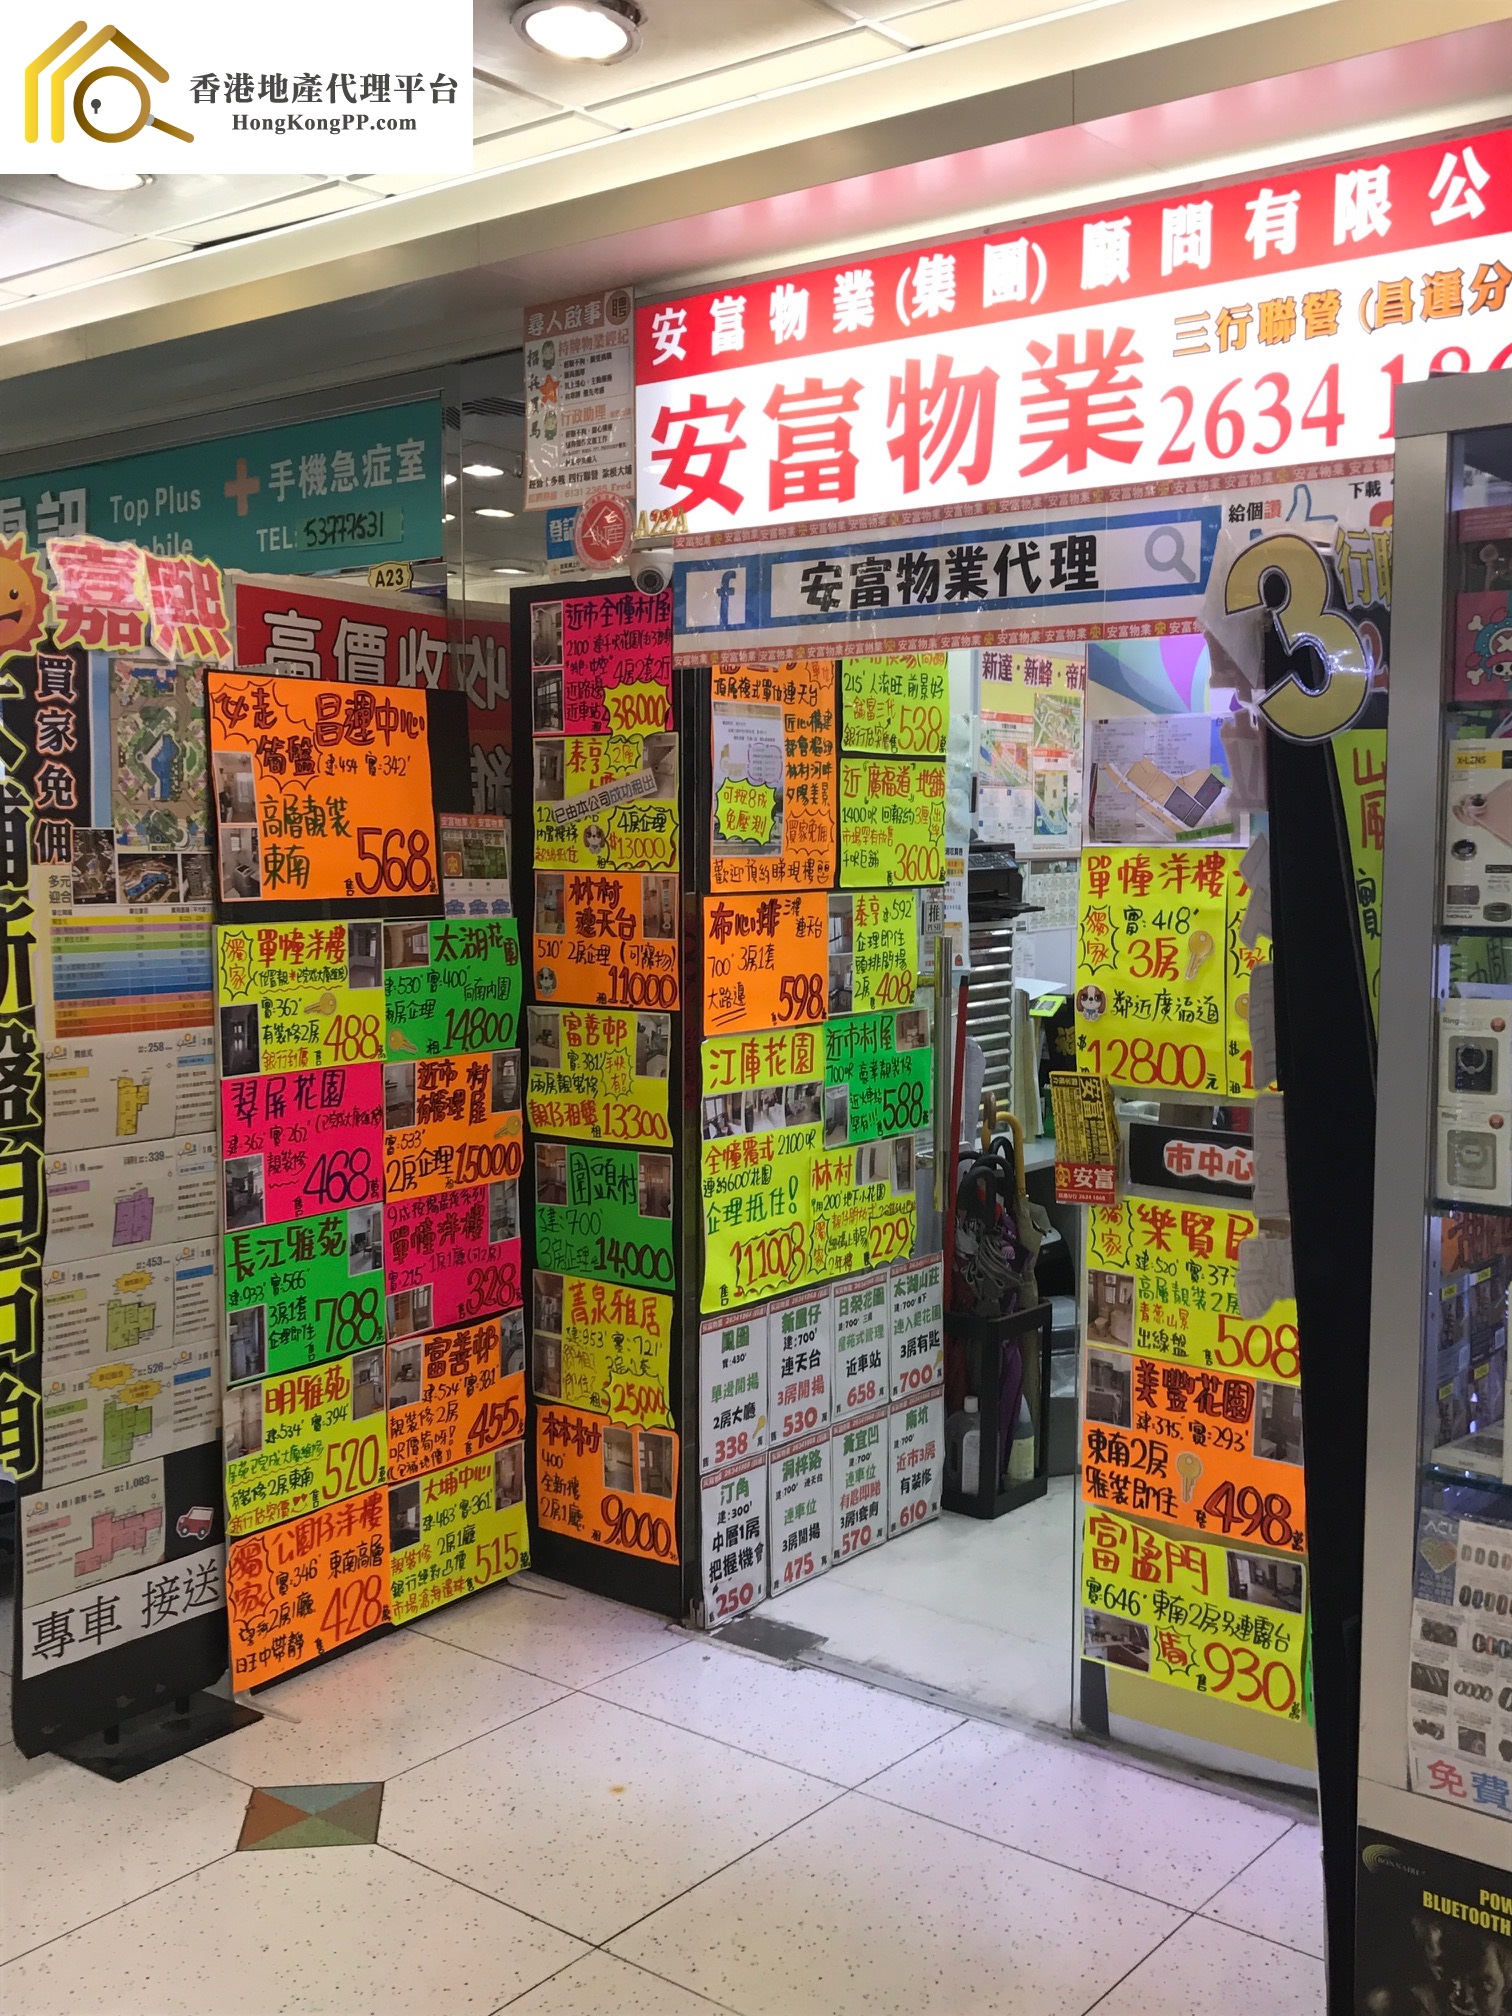 ShopEstate Agent: 安富物業代理(昌運中心)